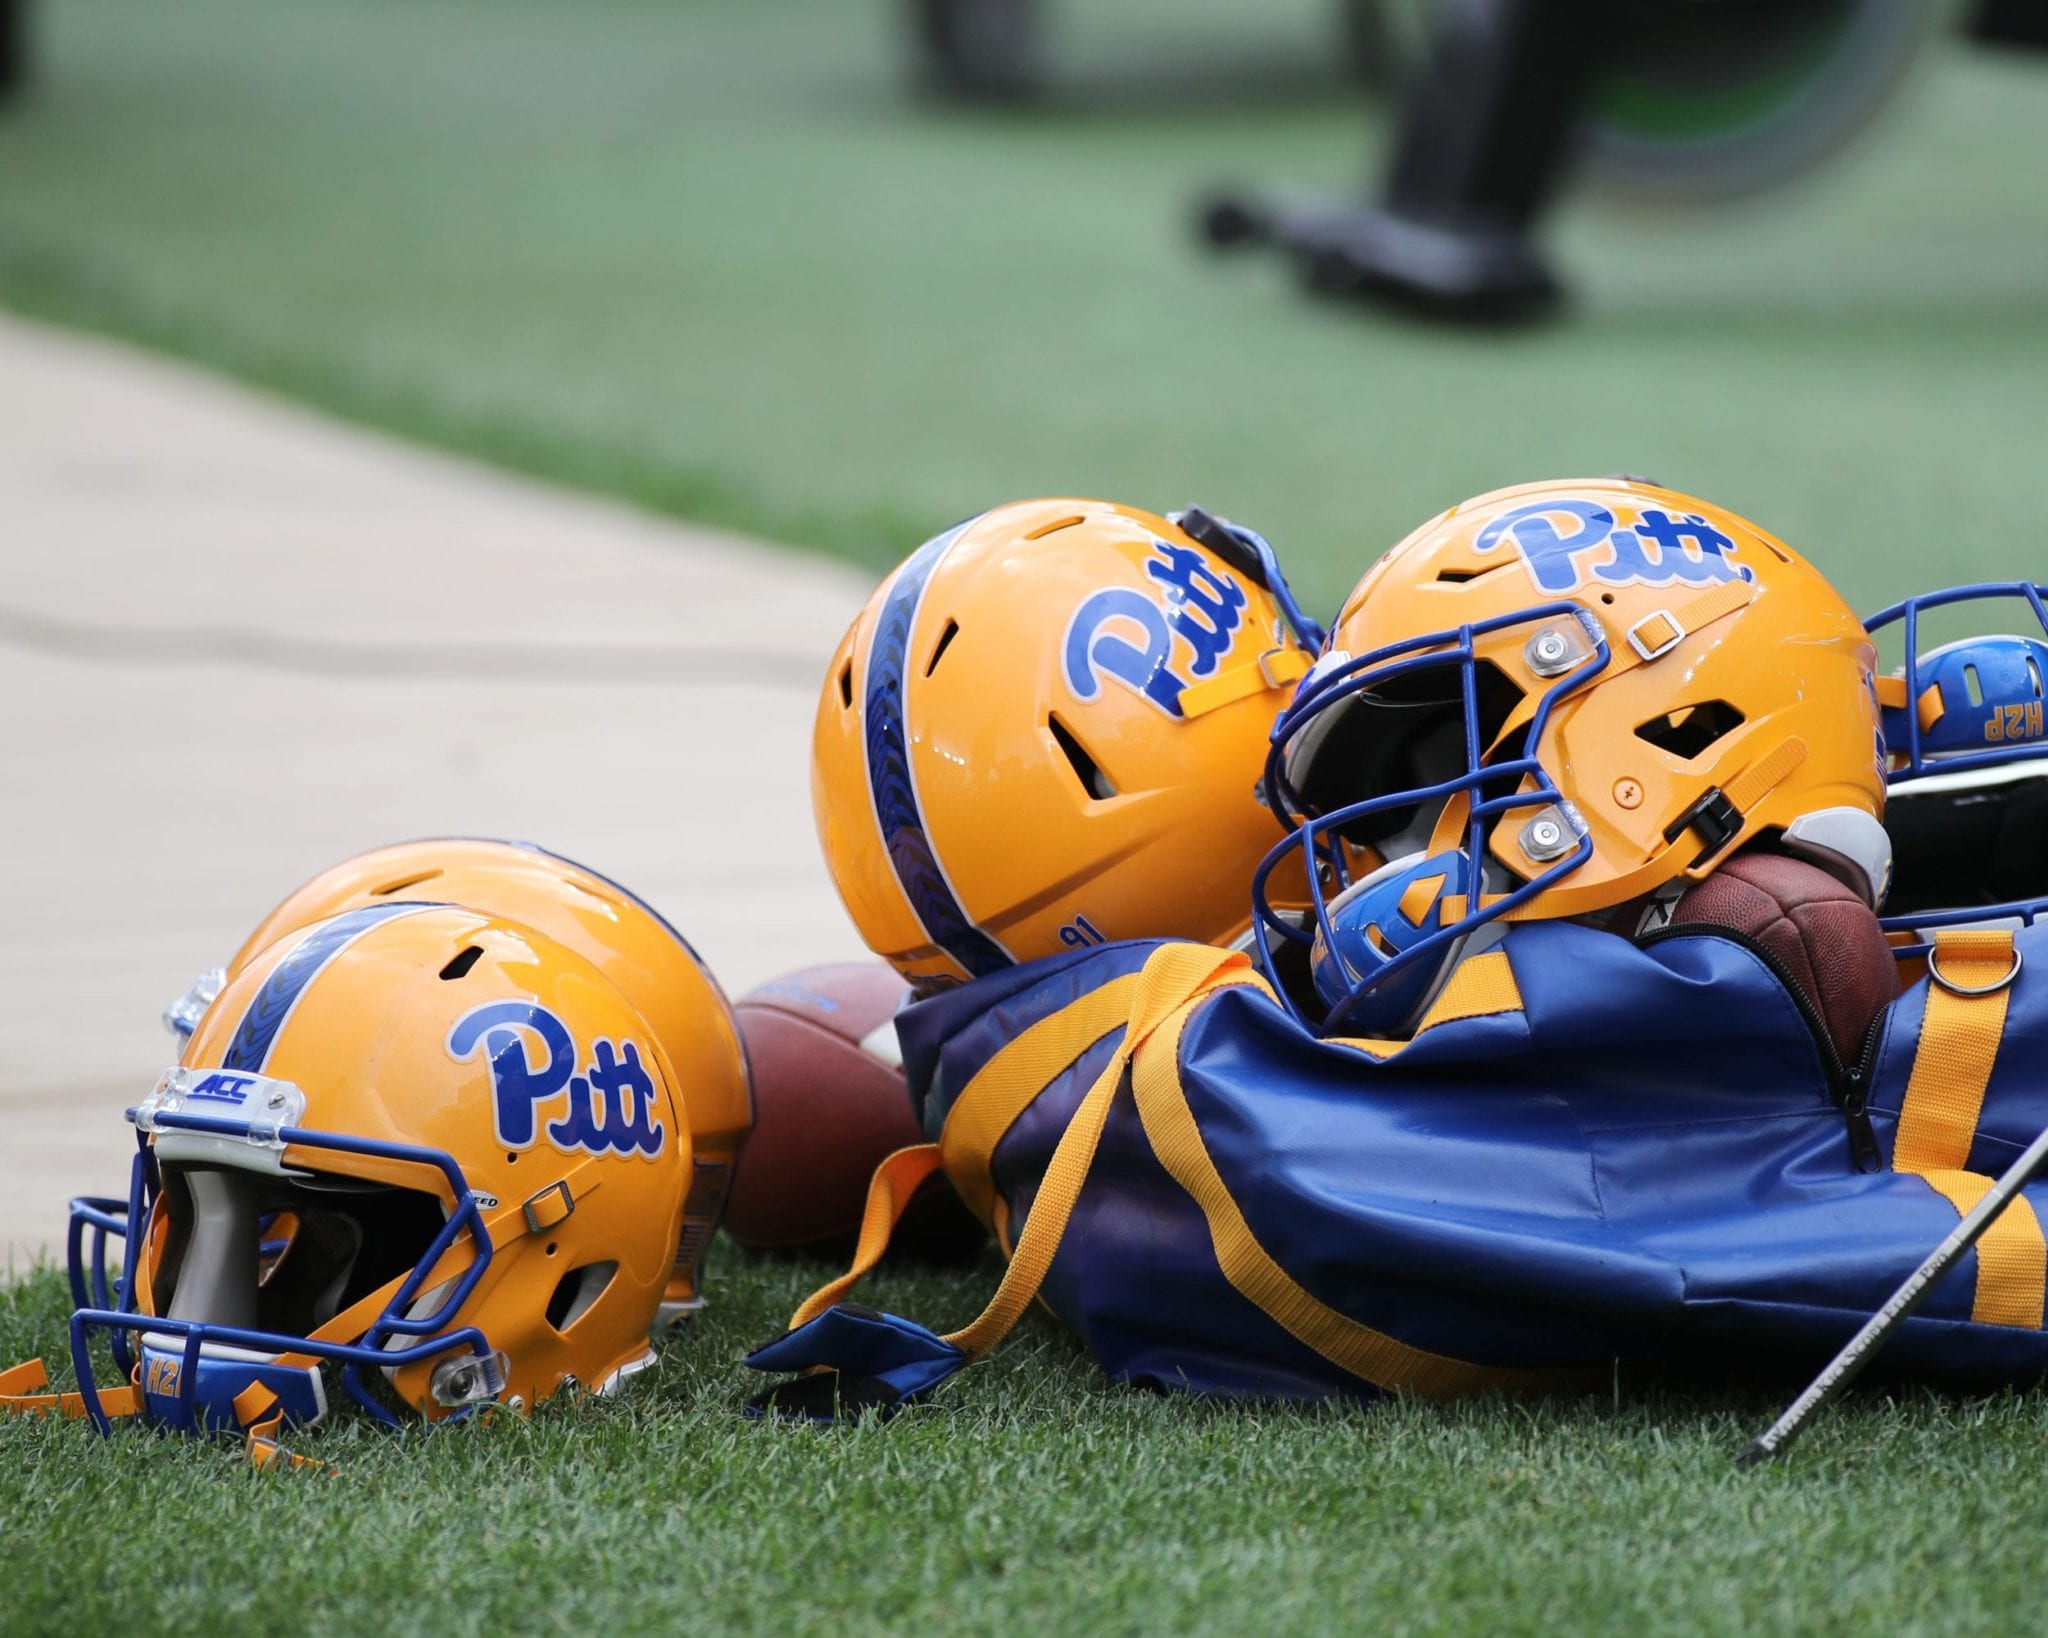 Pitt football helmets. Ryan Jacoby